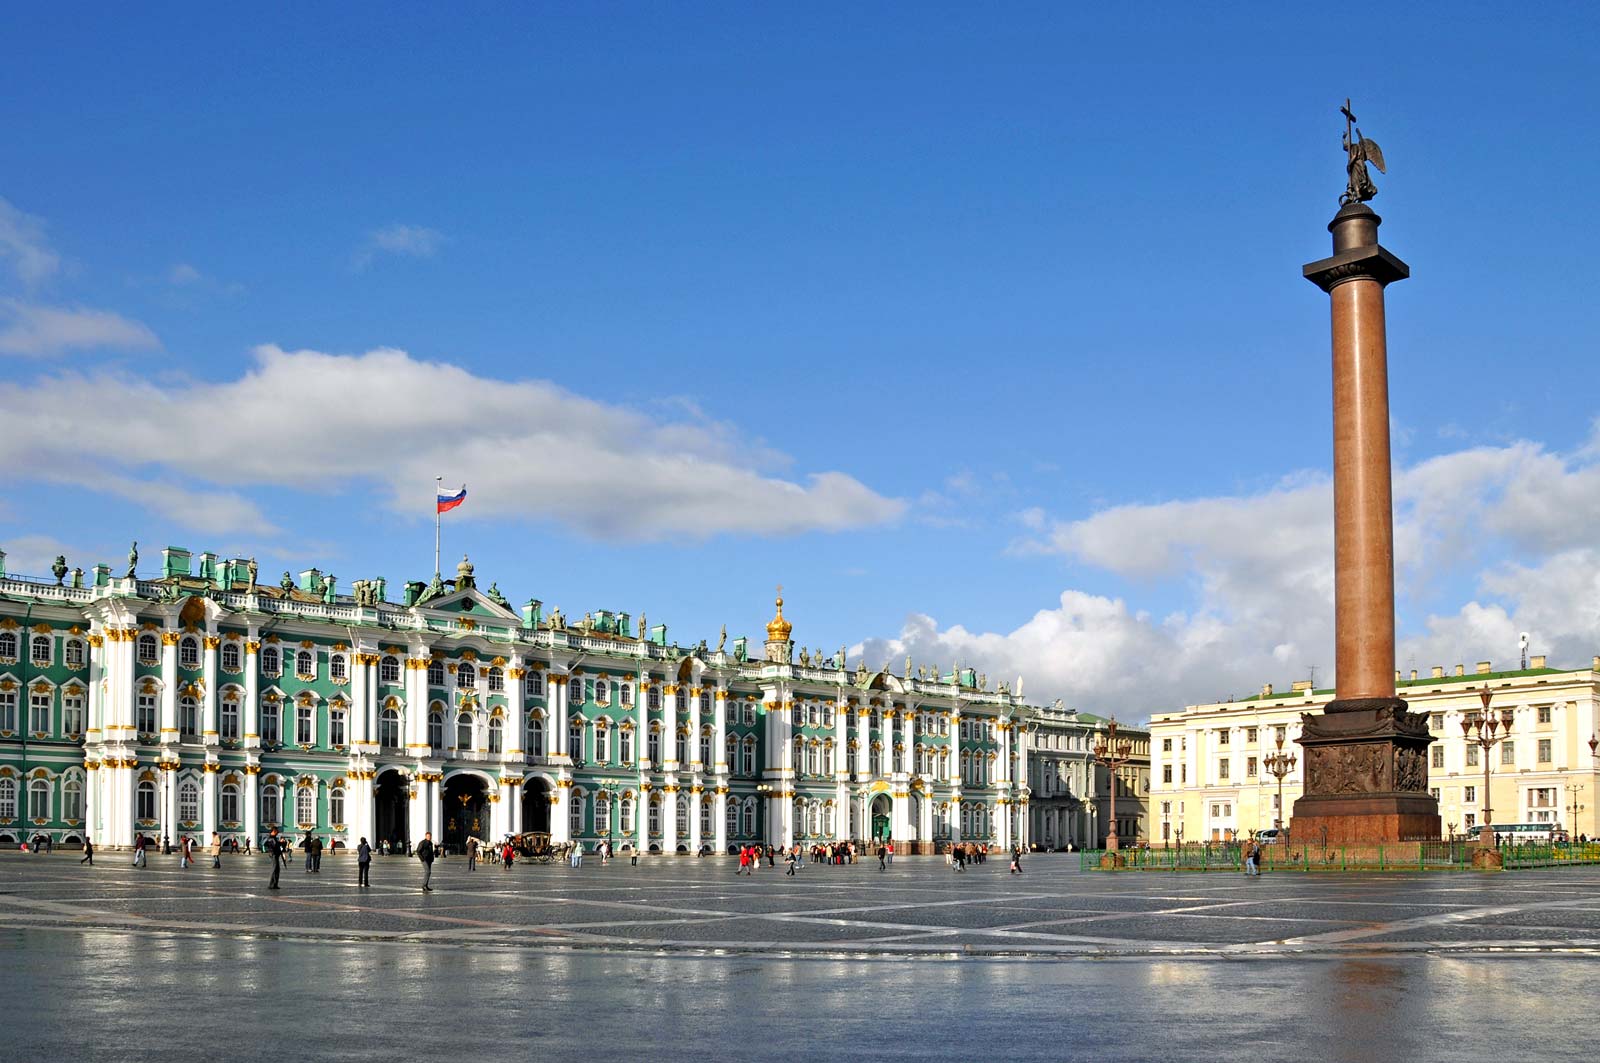 Alexander-Column-Palace-Square-St-Petersburg-Hermitage.jpg